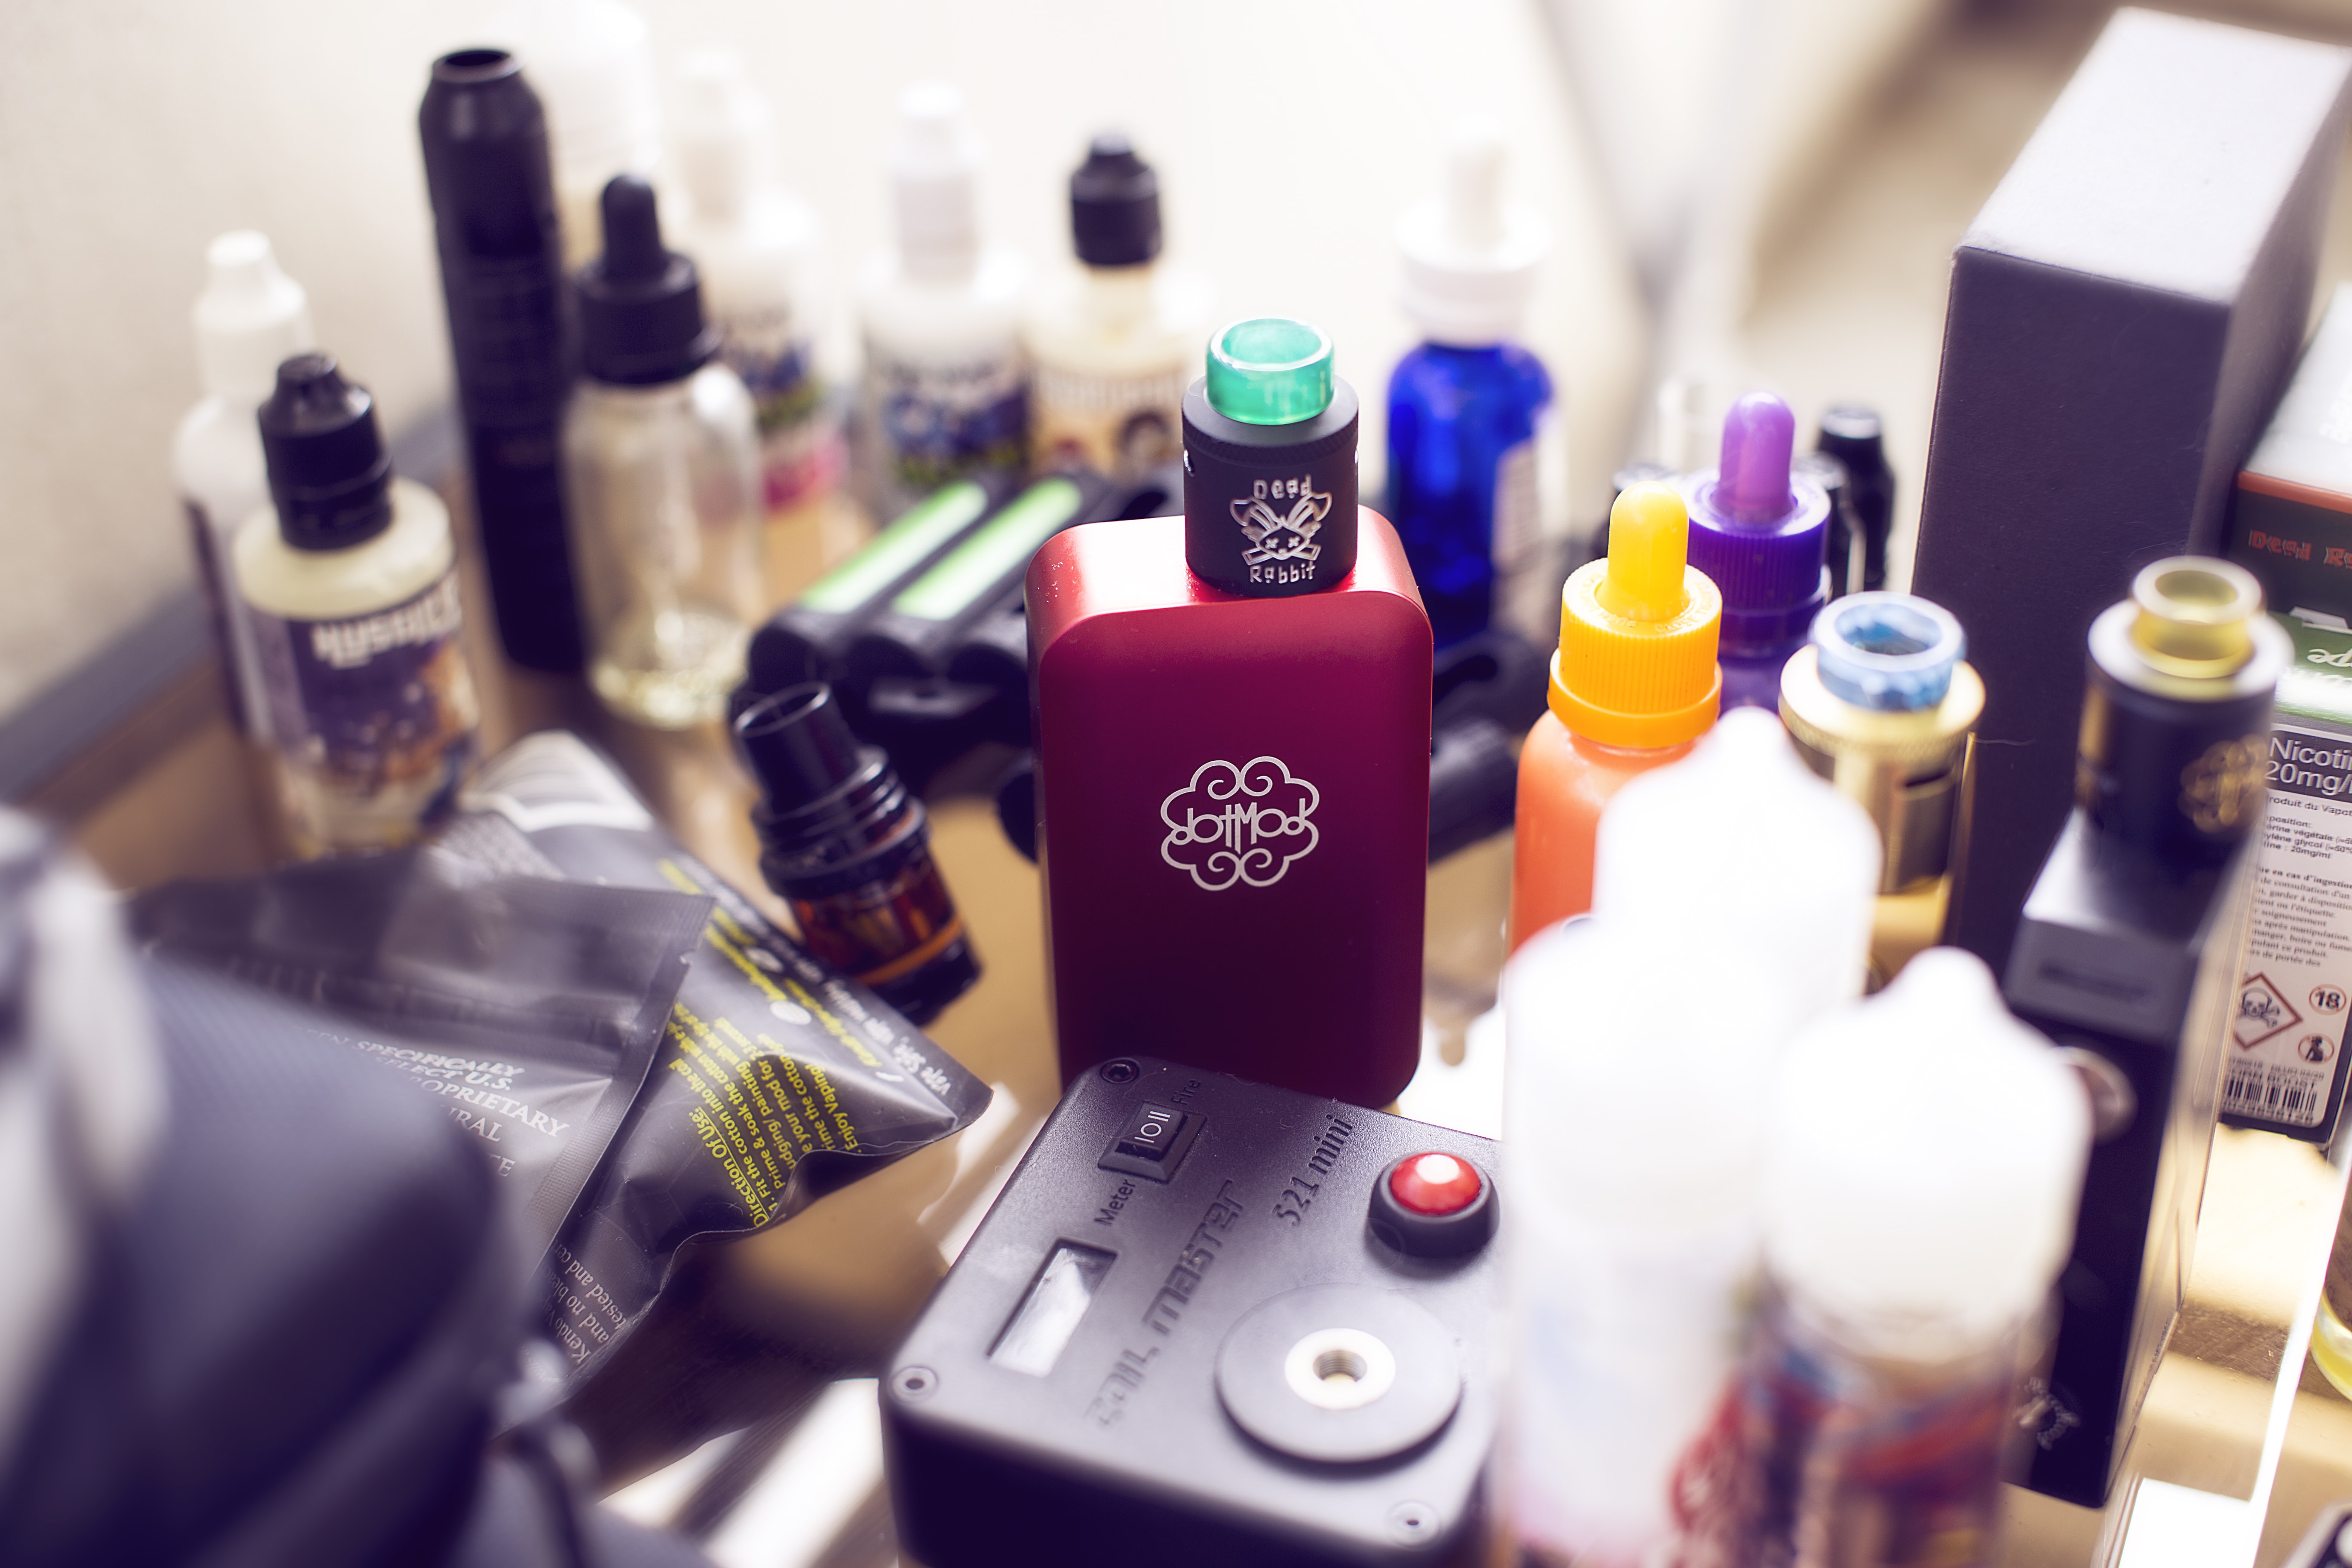 red box mod vape beside e-juice bottles - The Future Of Vaping